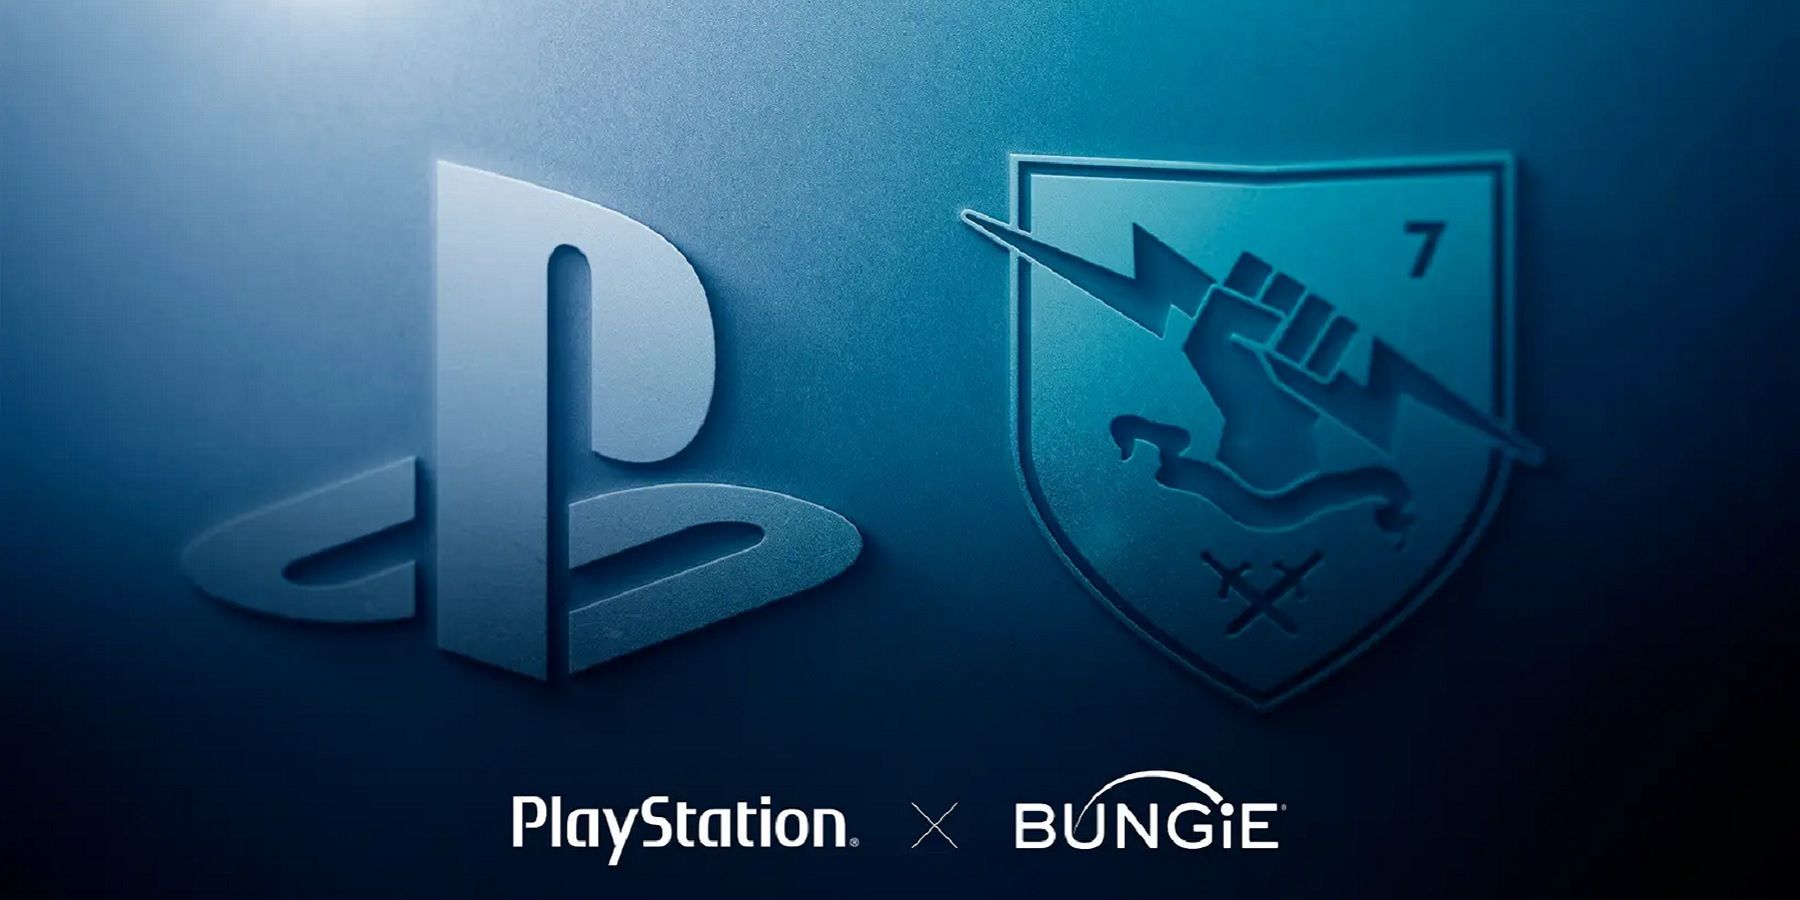 playstation and bungie logos